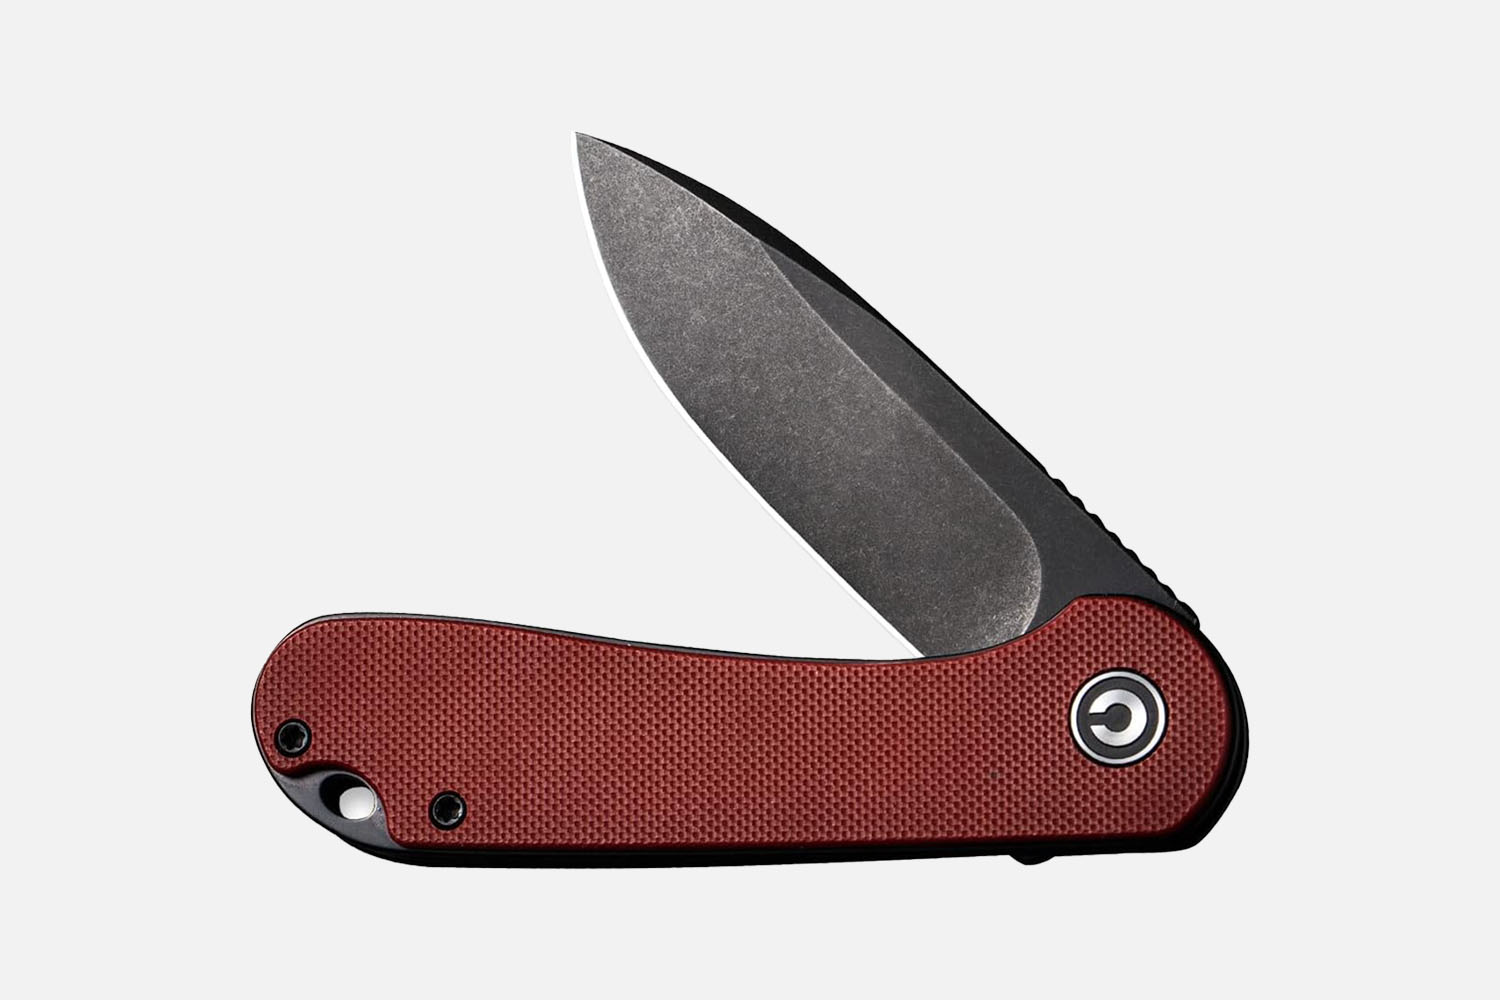 Best $50 Pocket Knife: Civivi Elementum